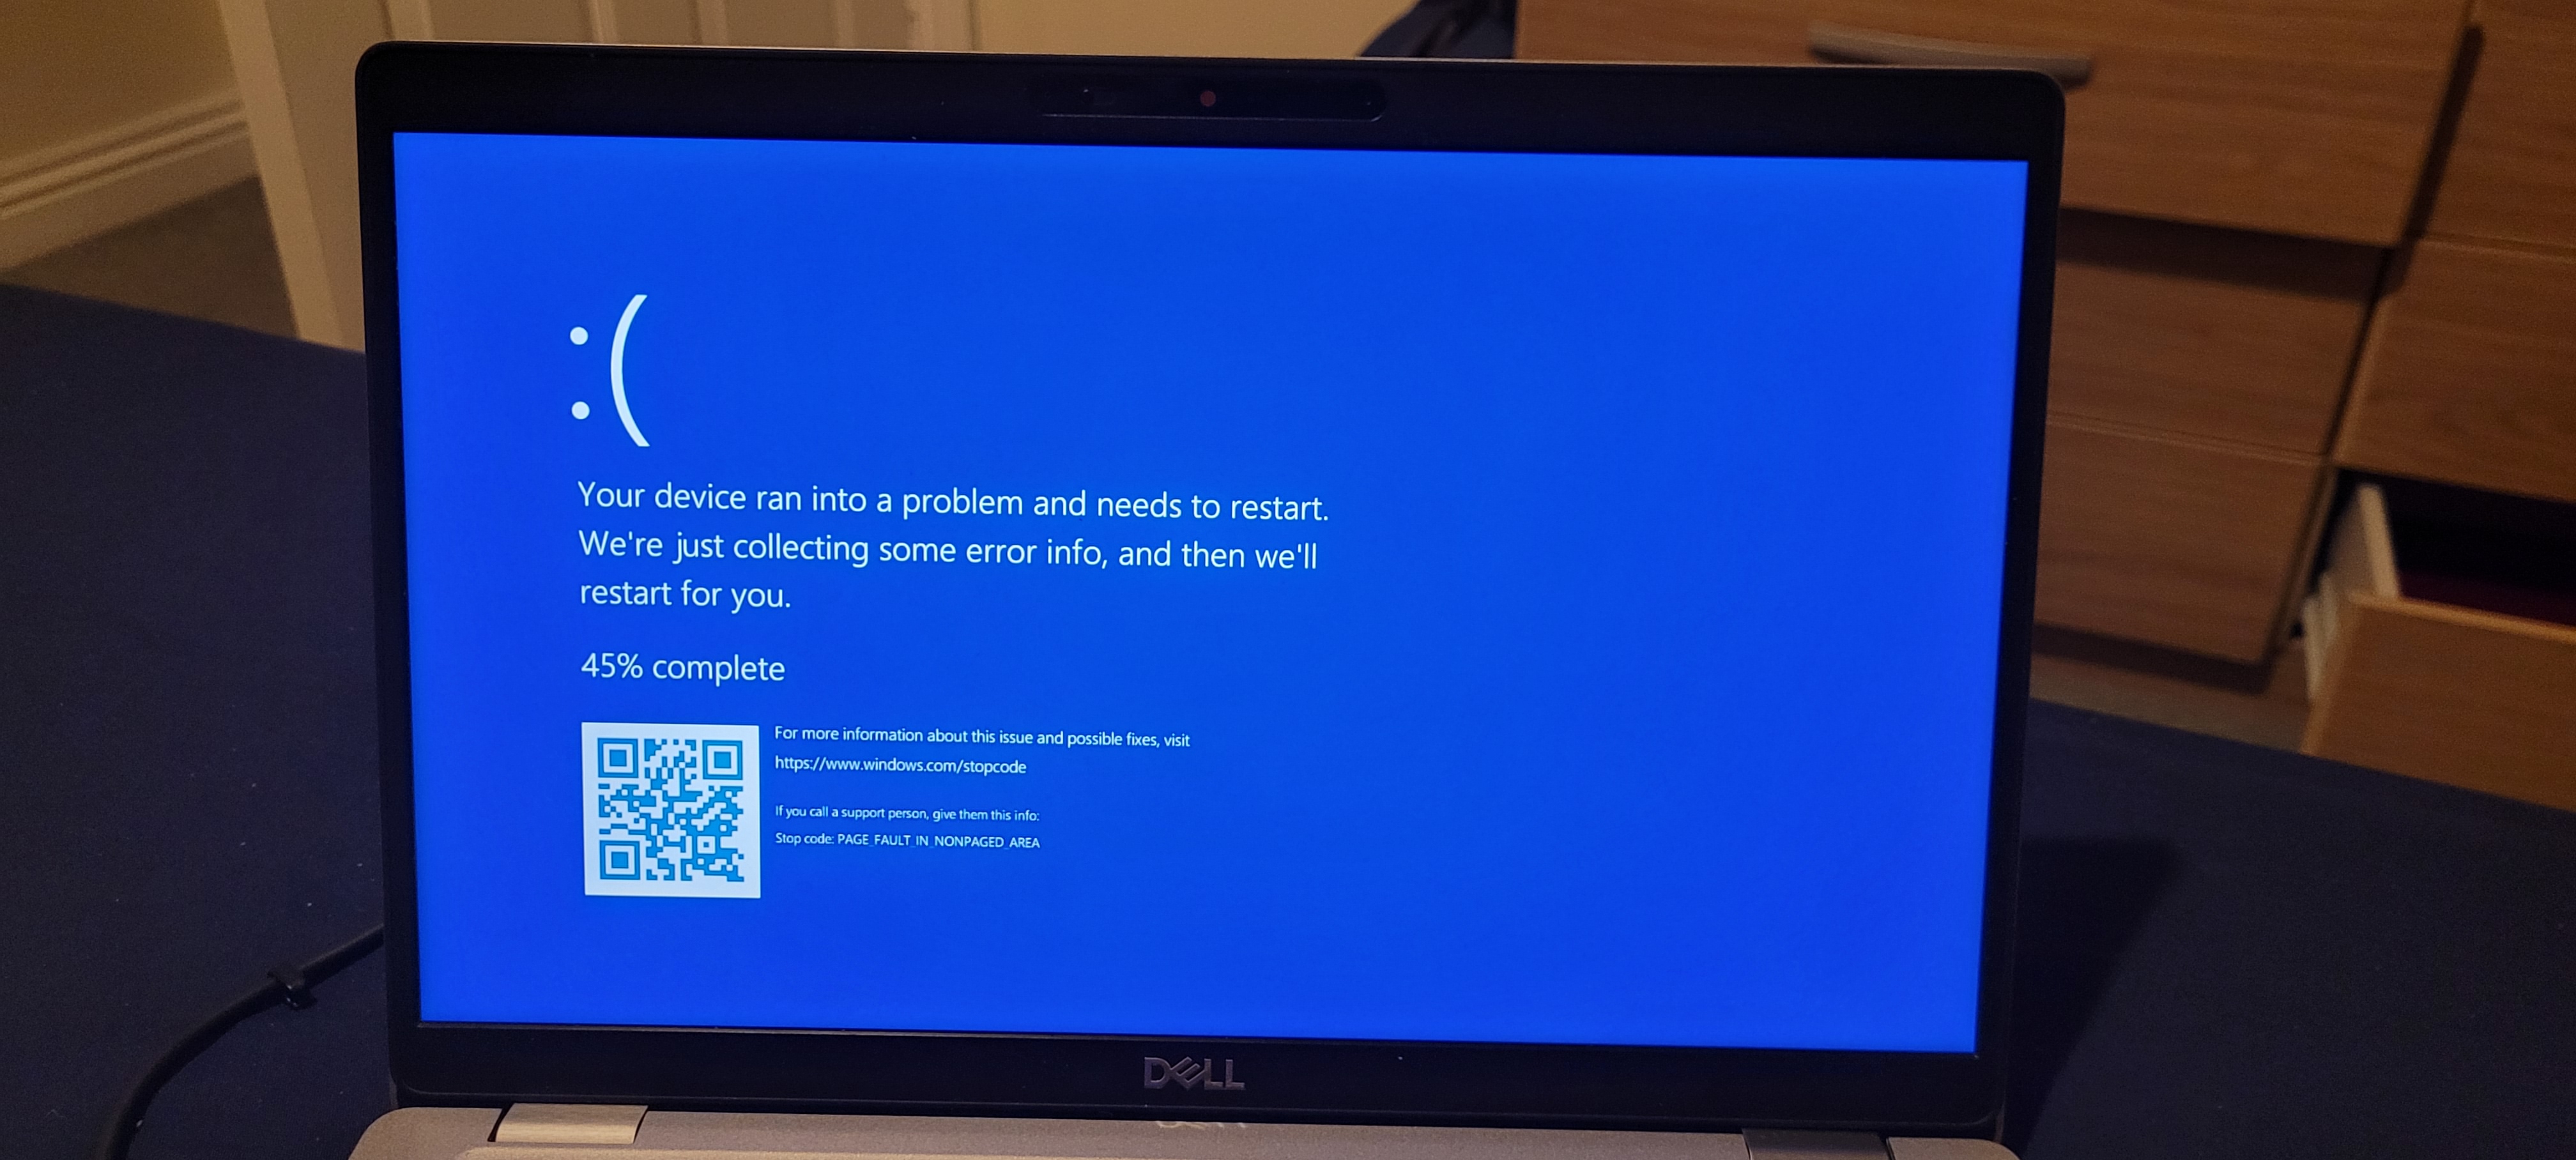 Dell error message on computer screen